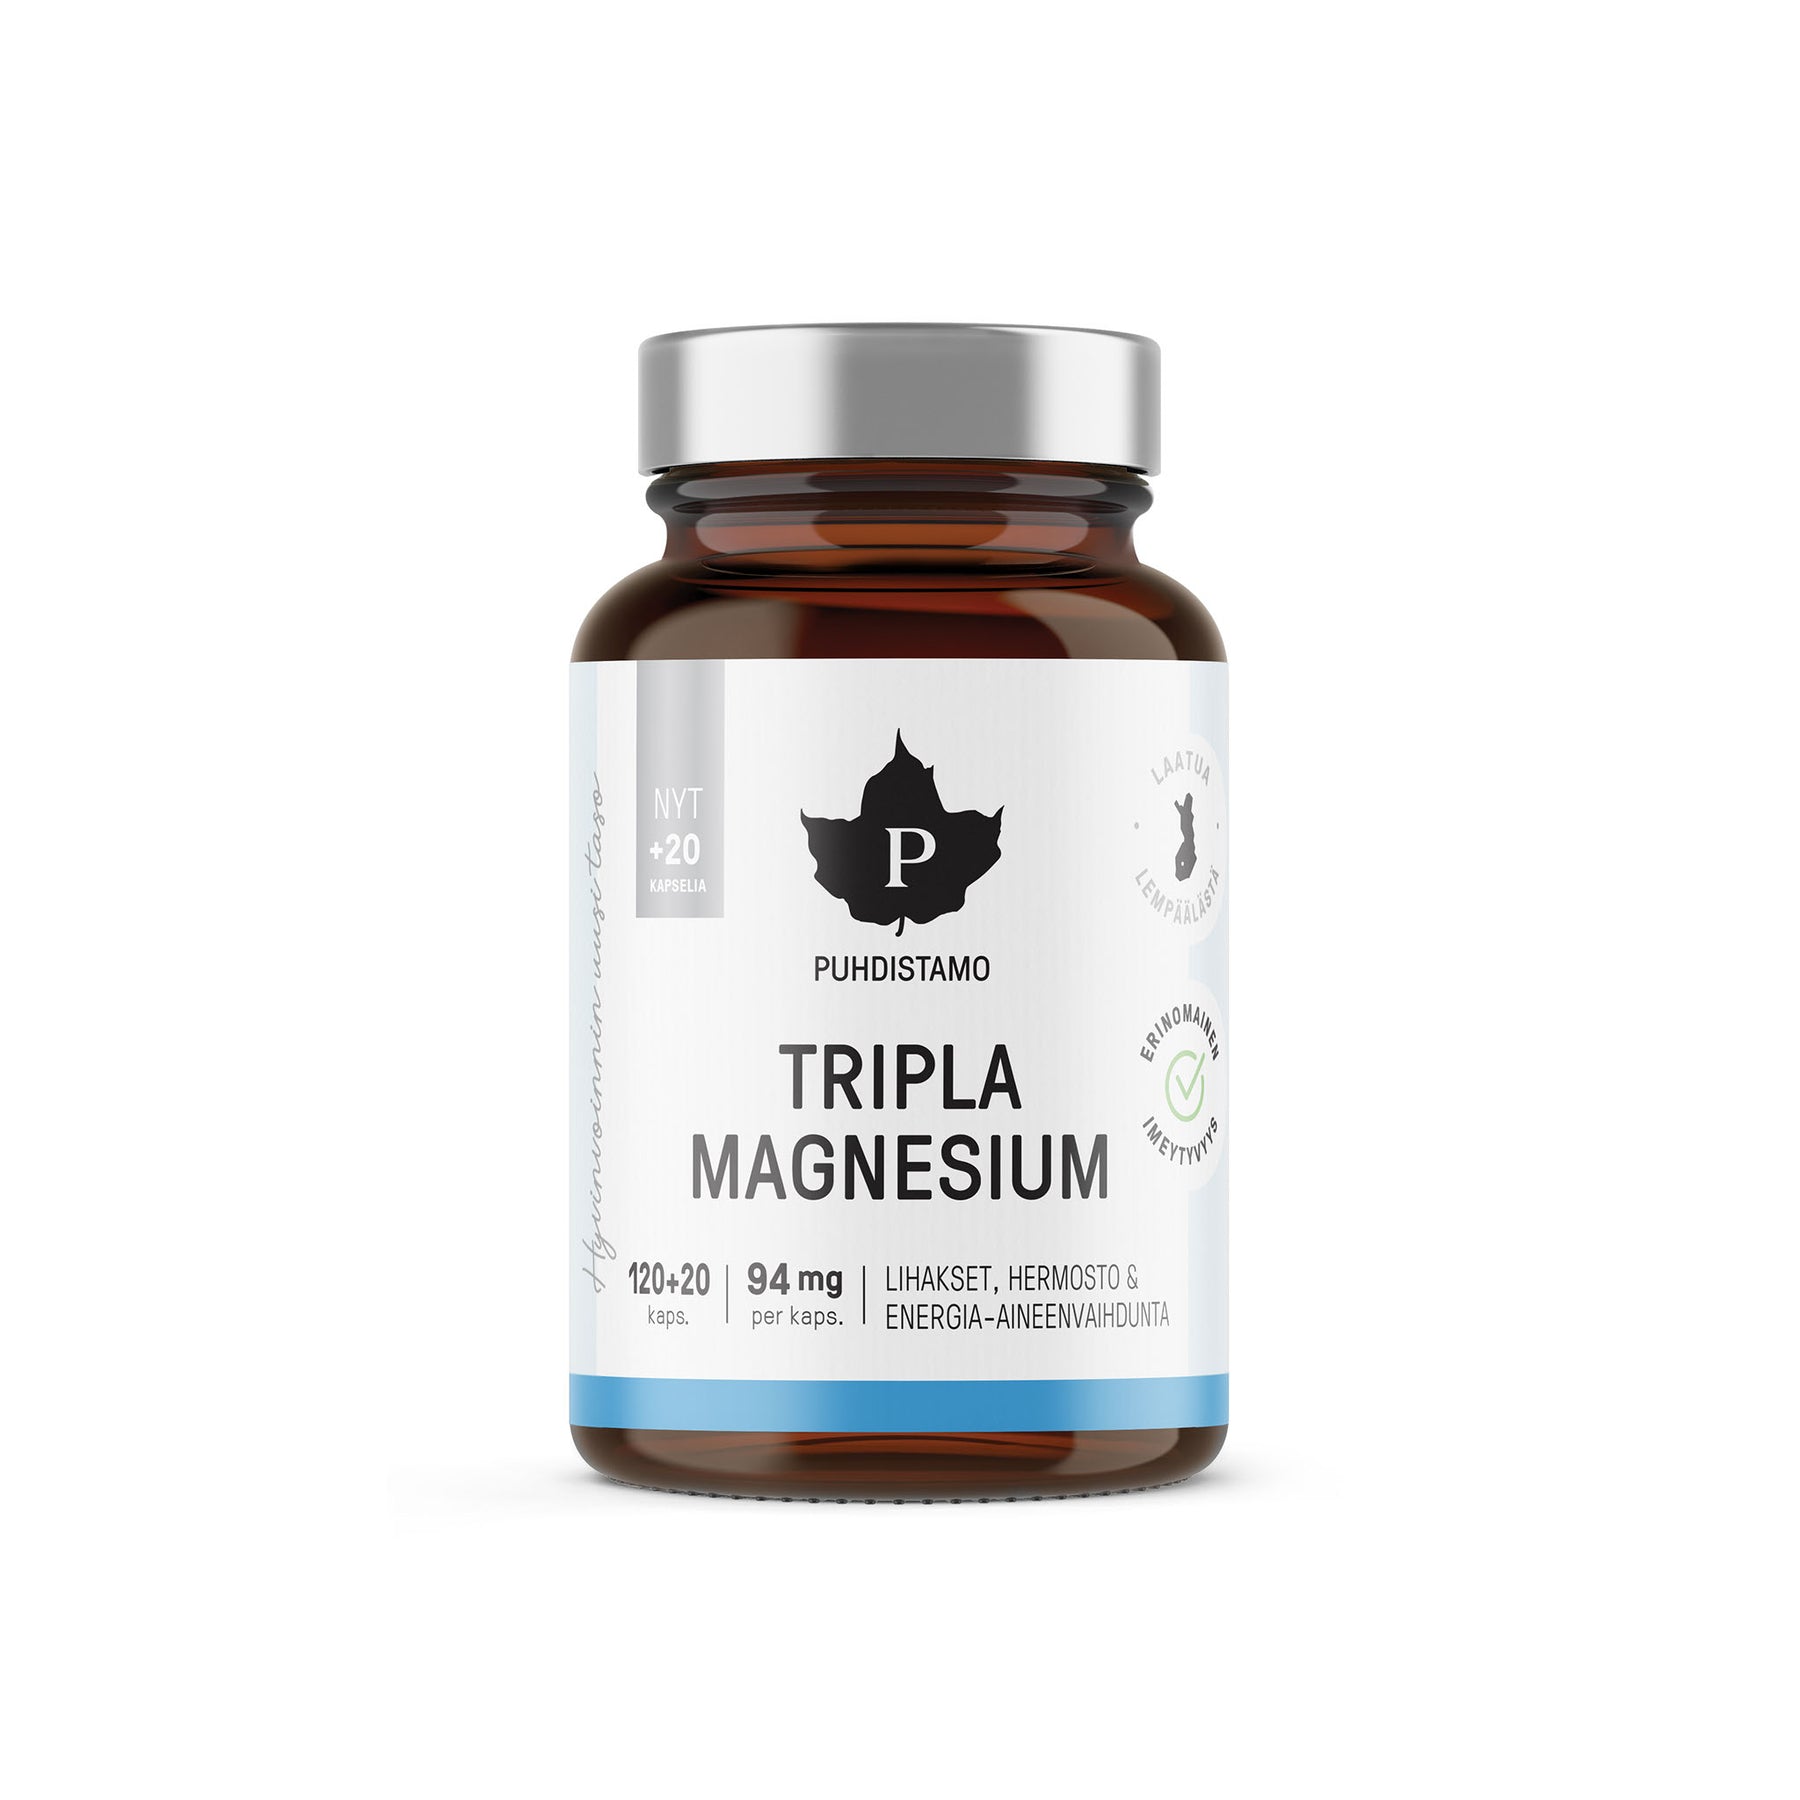 Puhdistamo Tripla Magnesium Kampanjapakkaus 120+20 kaps.